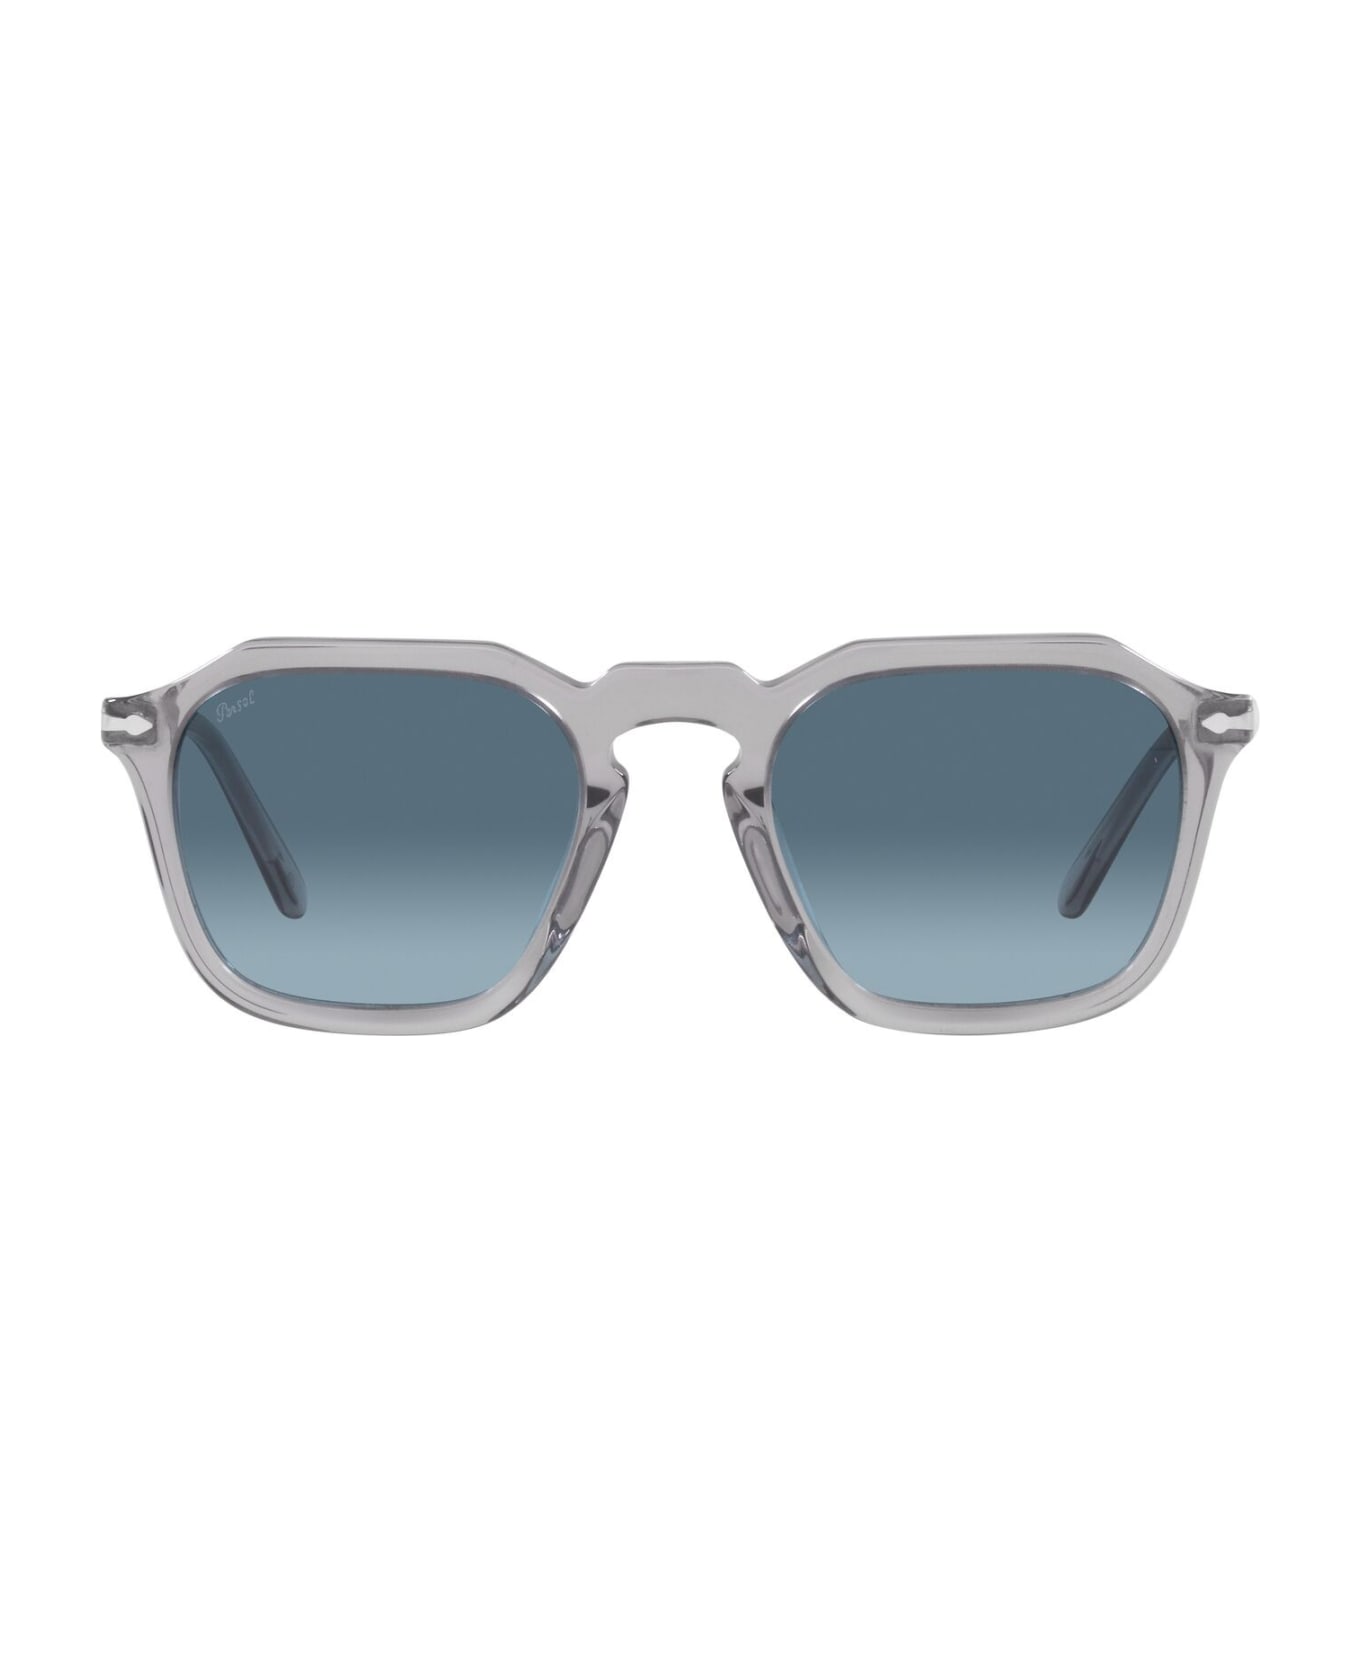 Persol Sunglasses - Grigio/Blu sfumato サングラス